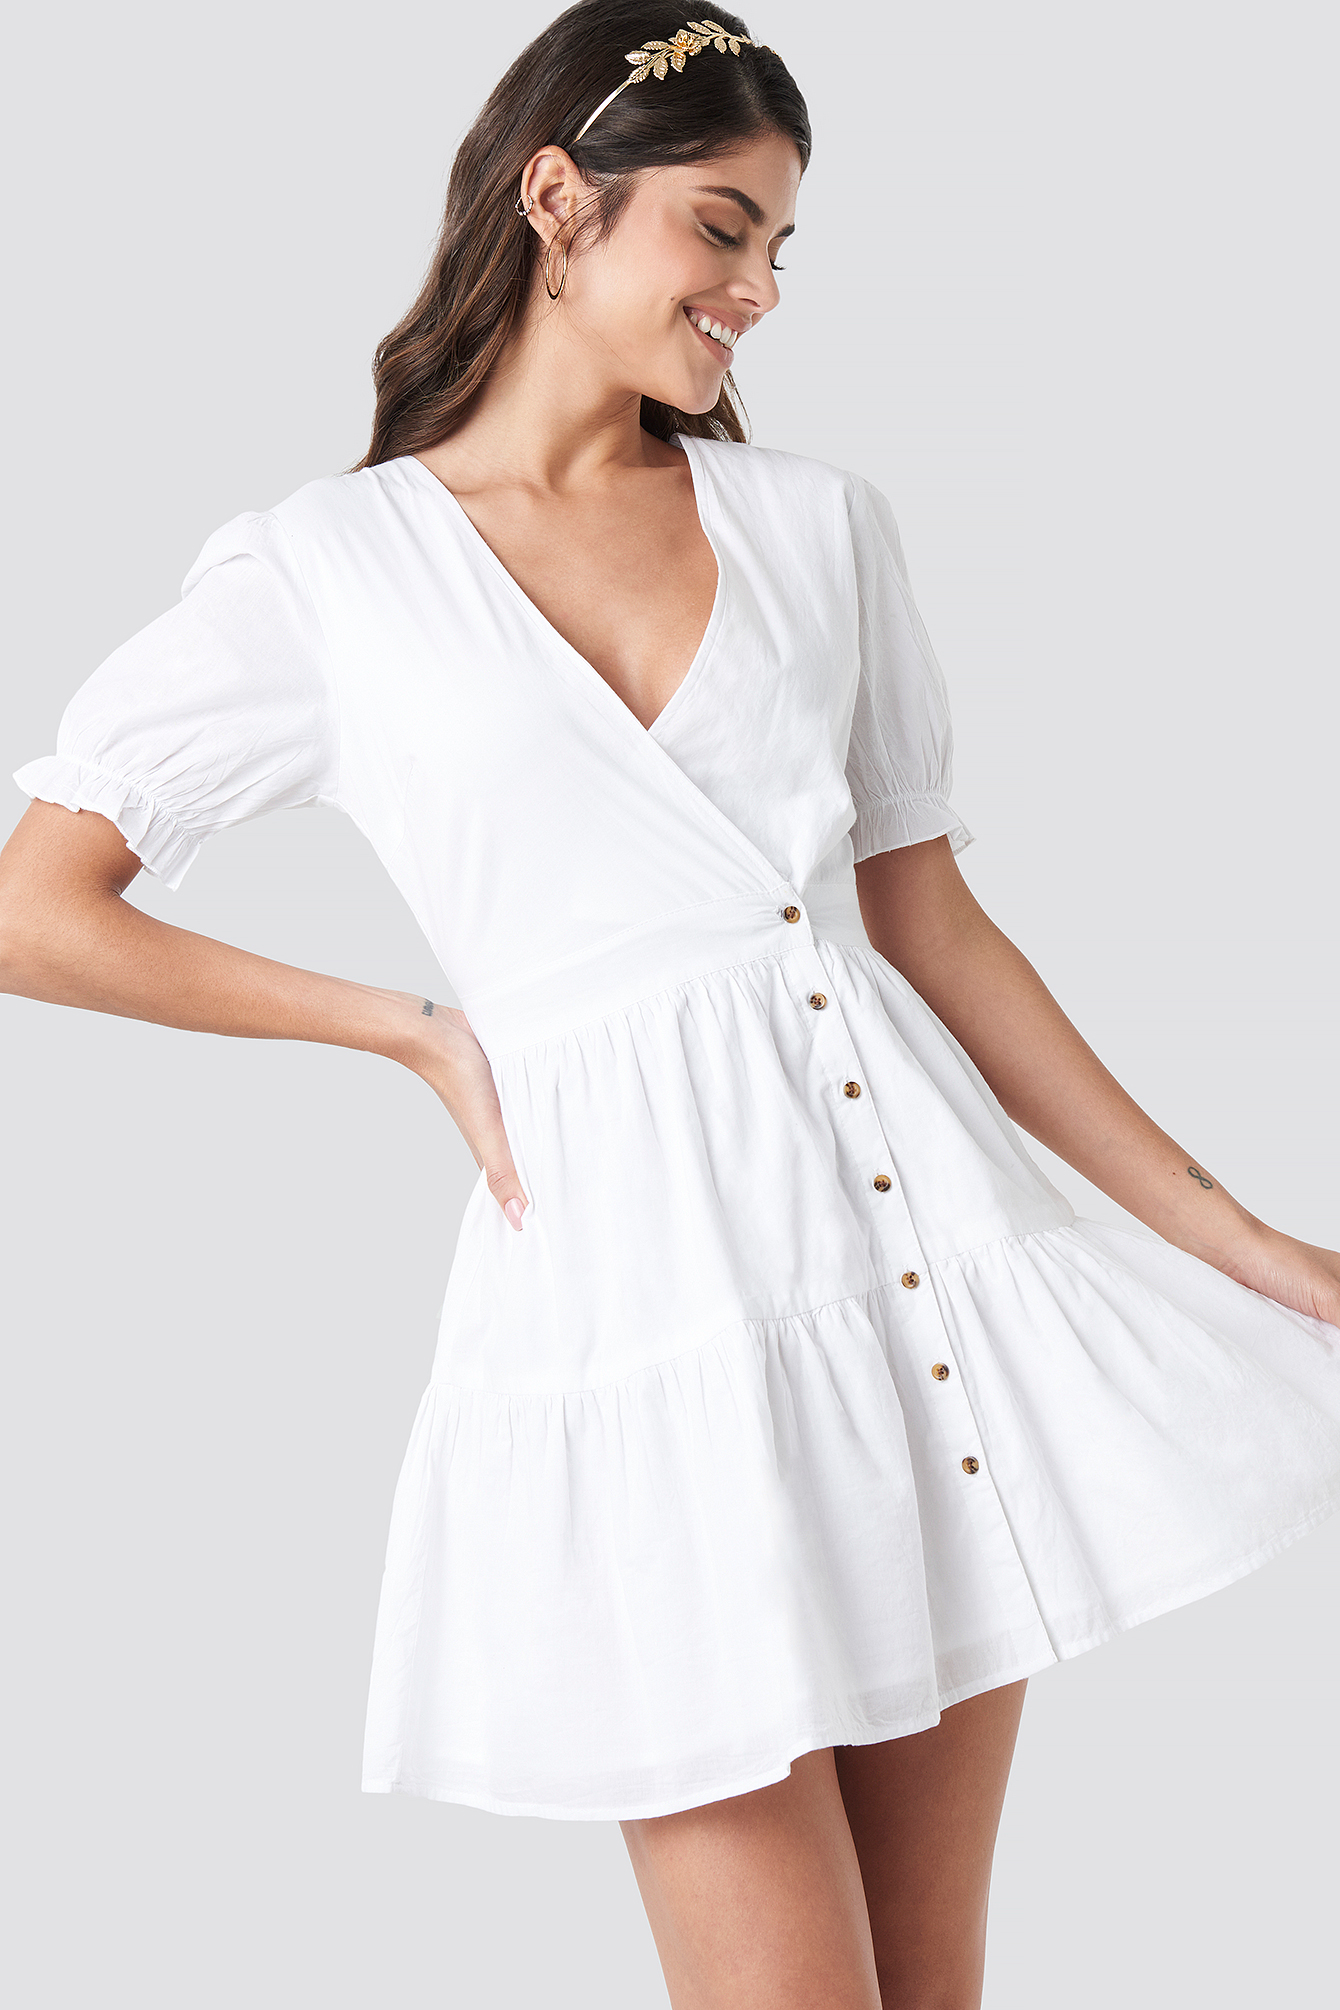 Wrap Front Puff Sleeve Button Dress White | na-kd.com - 1340 x 2010 jpeg 1056kB